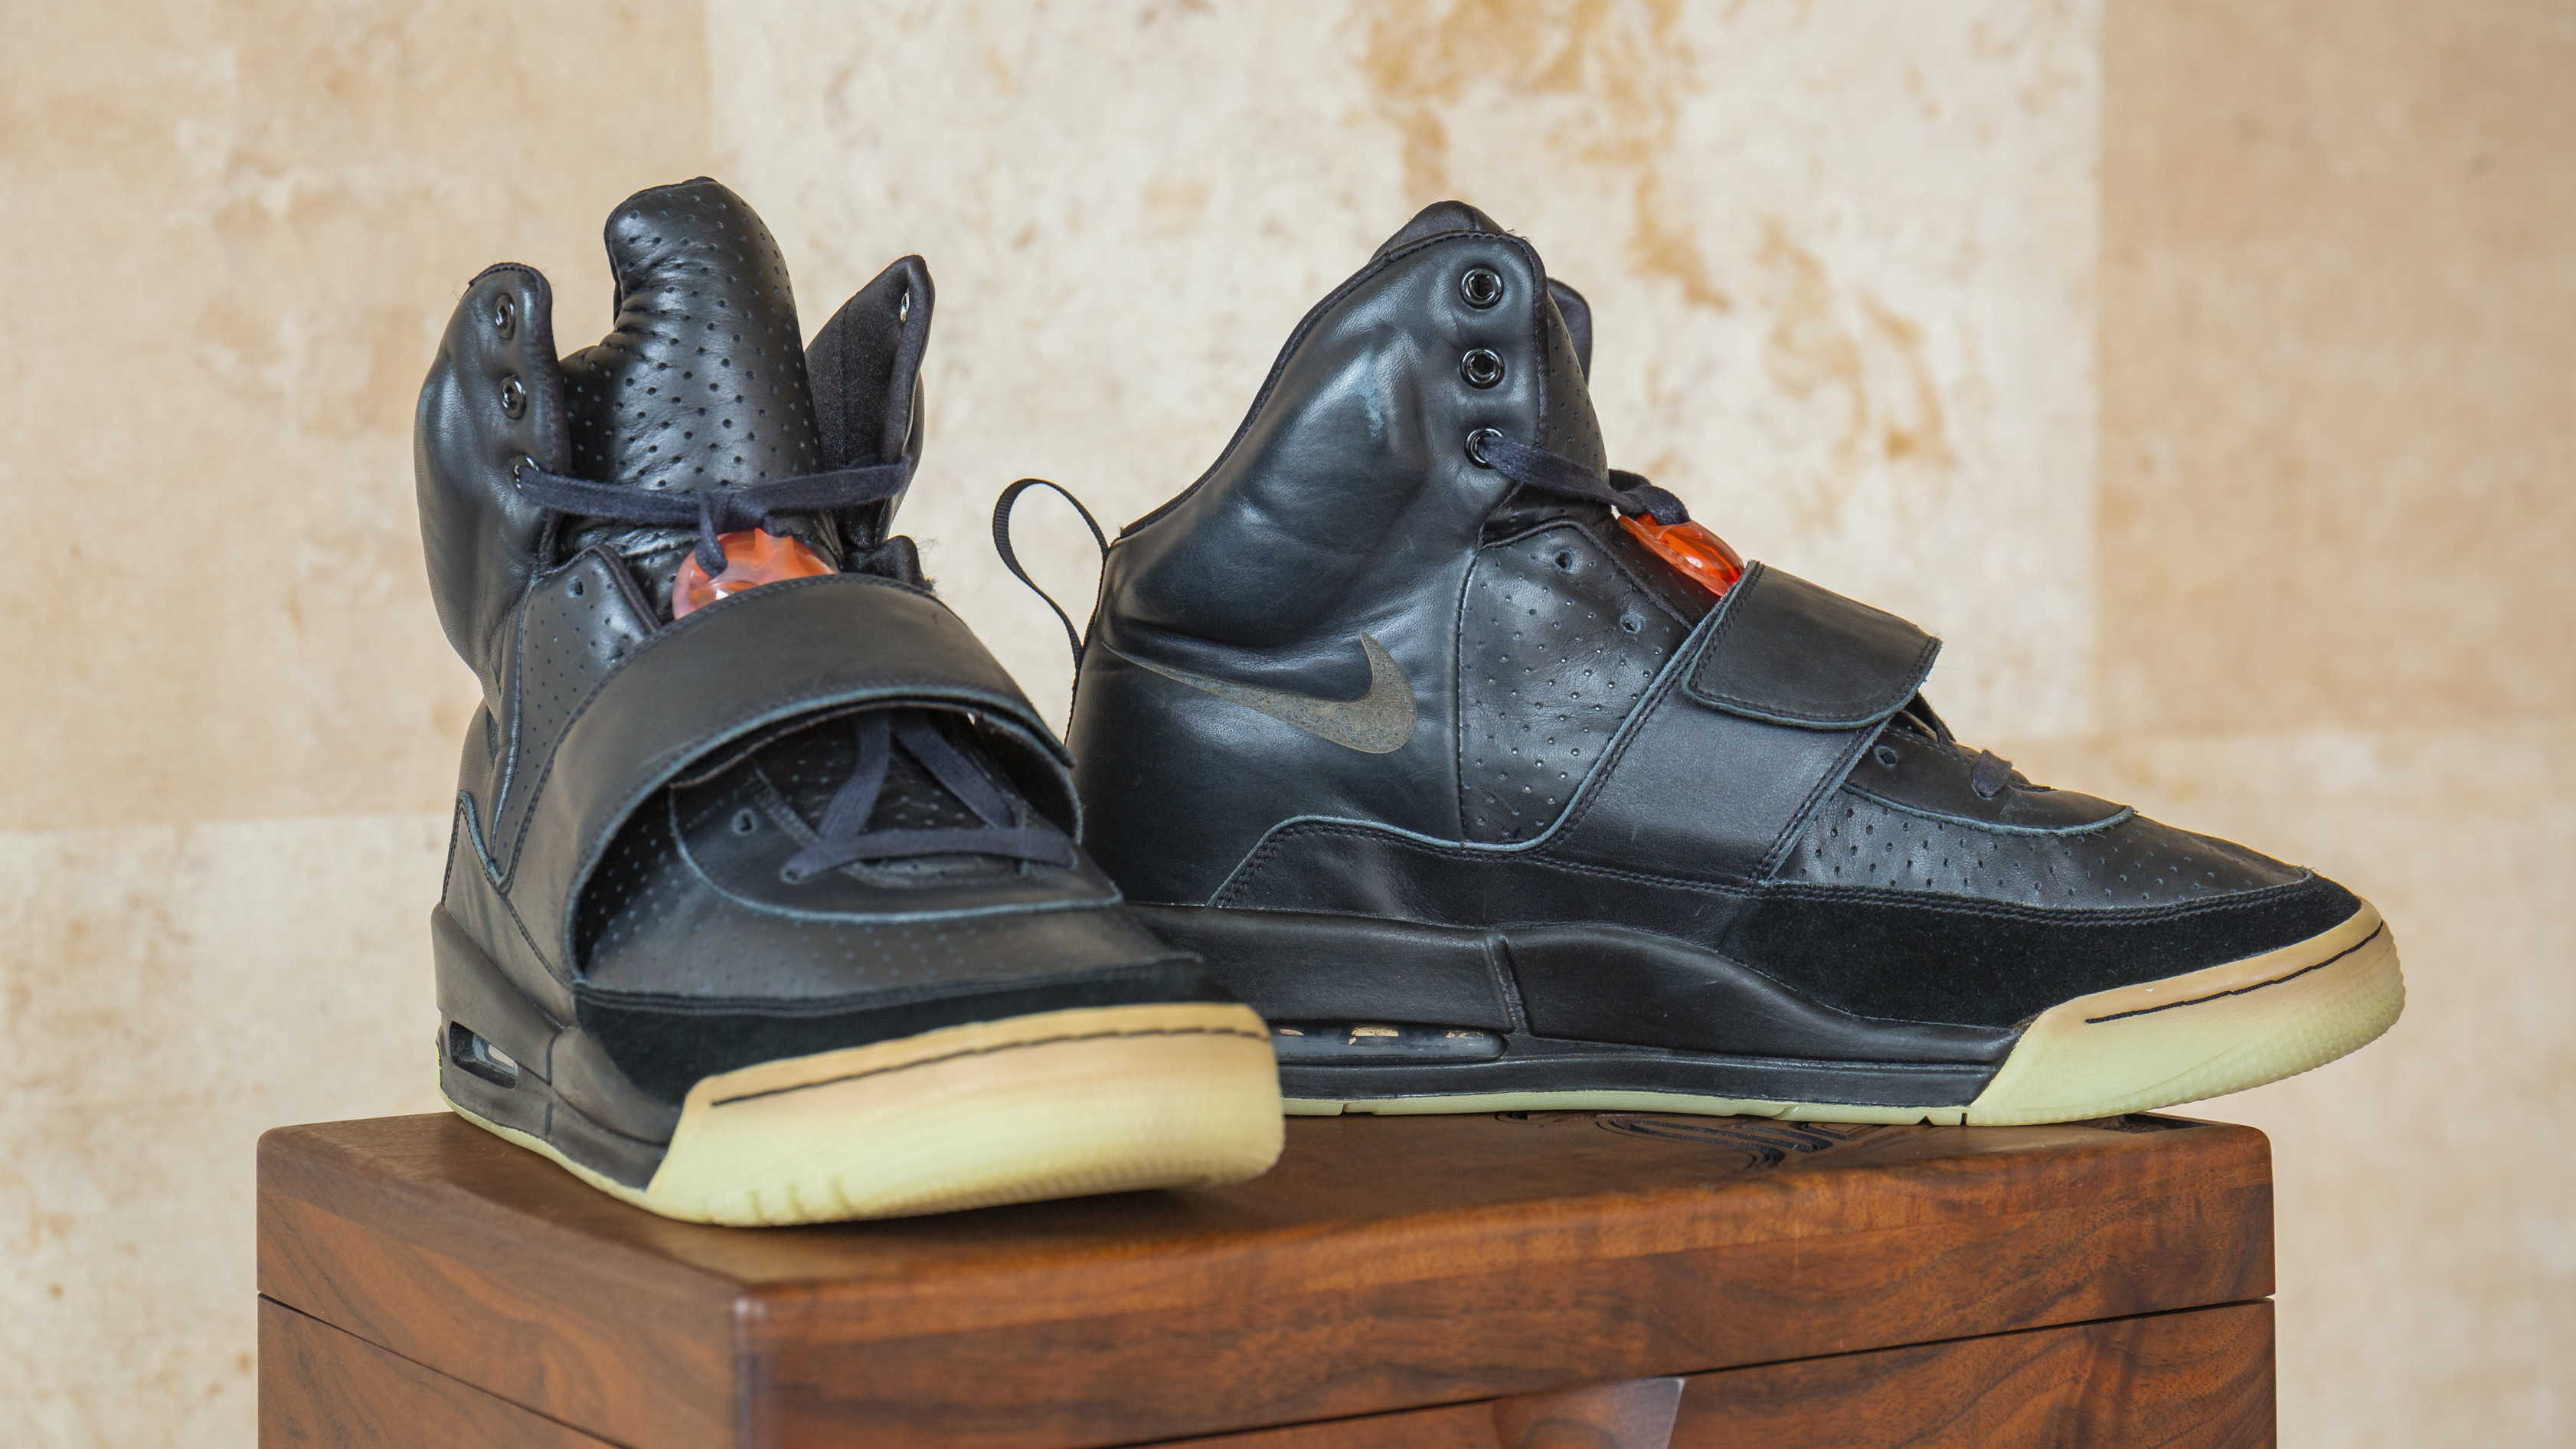 Eenheid vervolgens Omkleden Kanye West's 'Grammy' Nike Air Yeezy 1 Sample Is Up for Sale | Complex